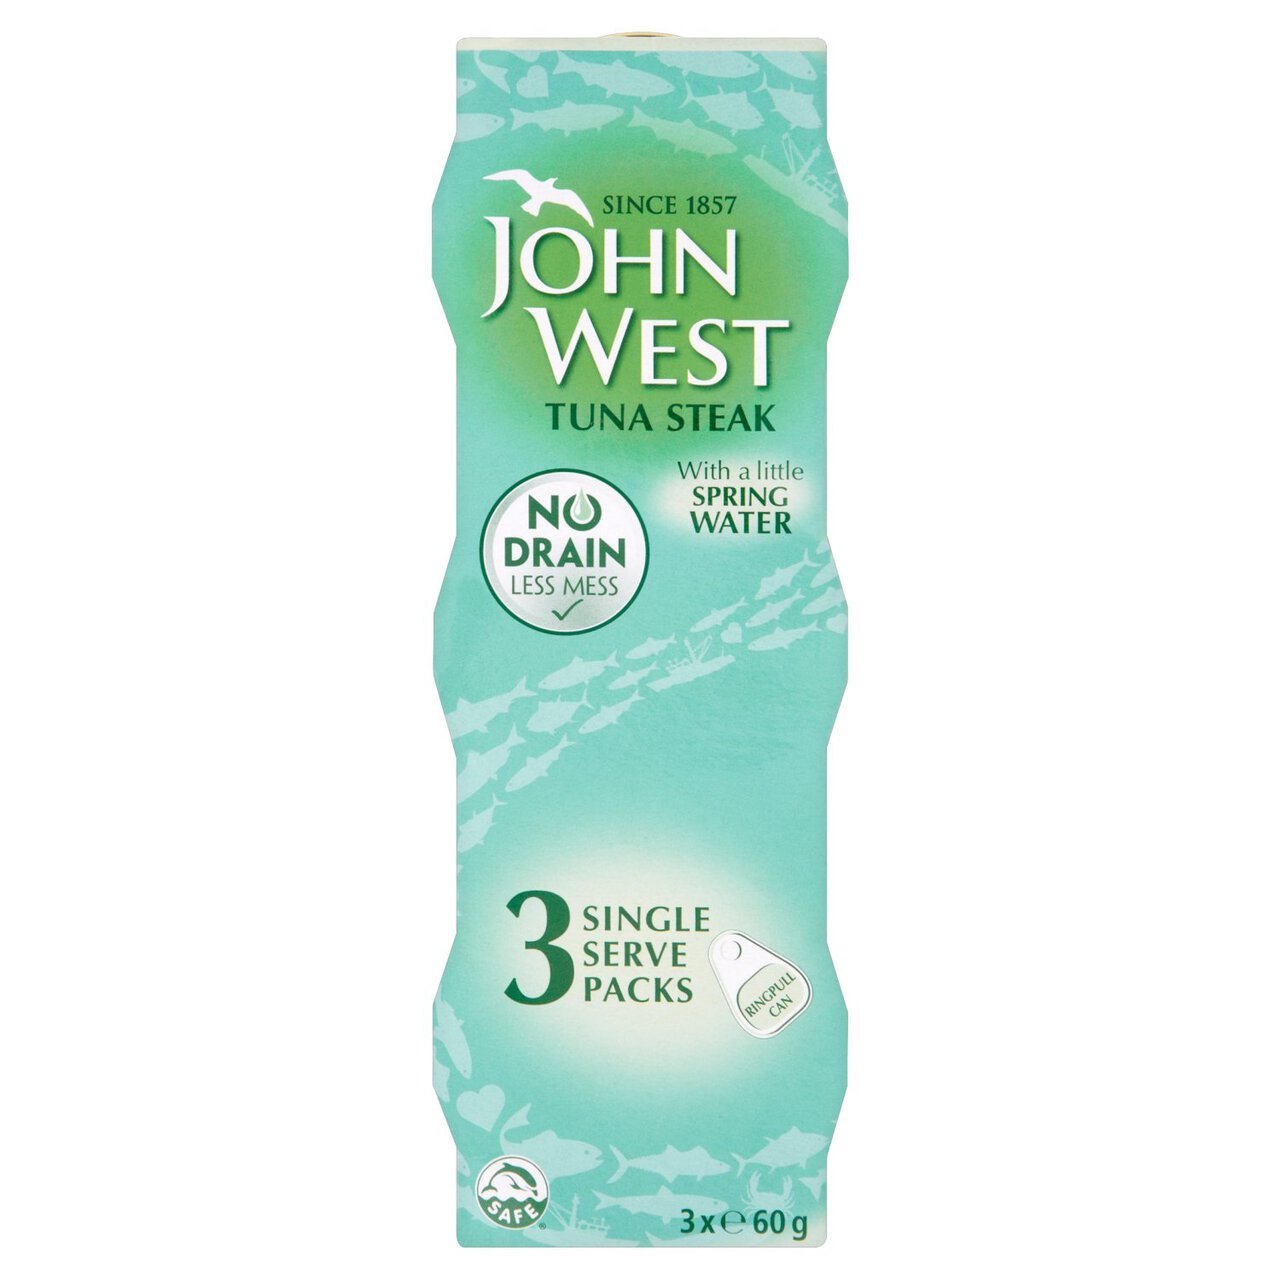 John West No Drain Tuna Steak Springwater 3 x 60g